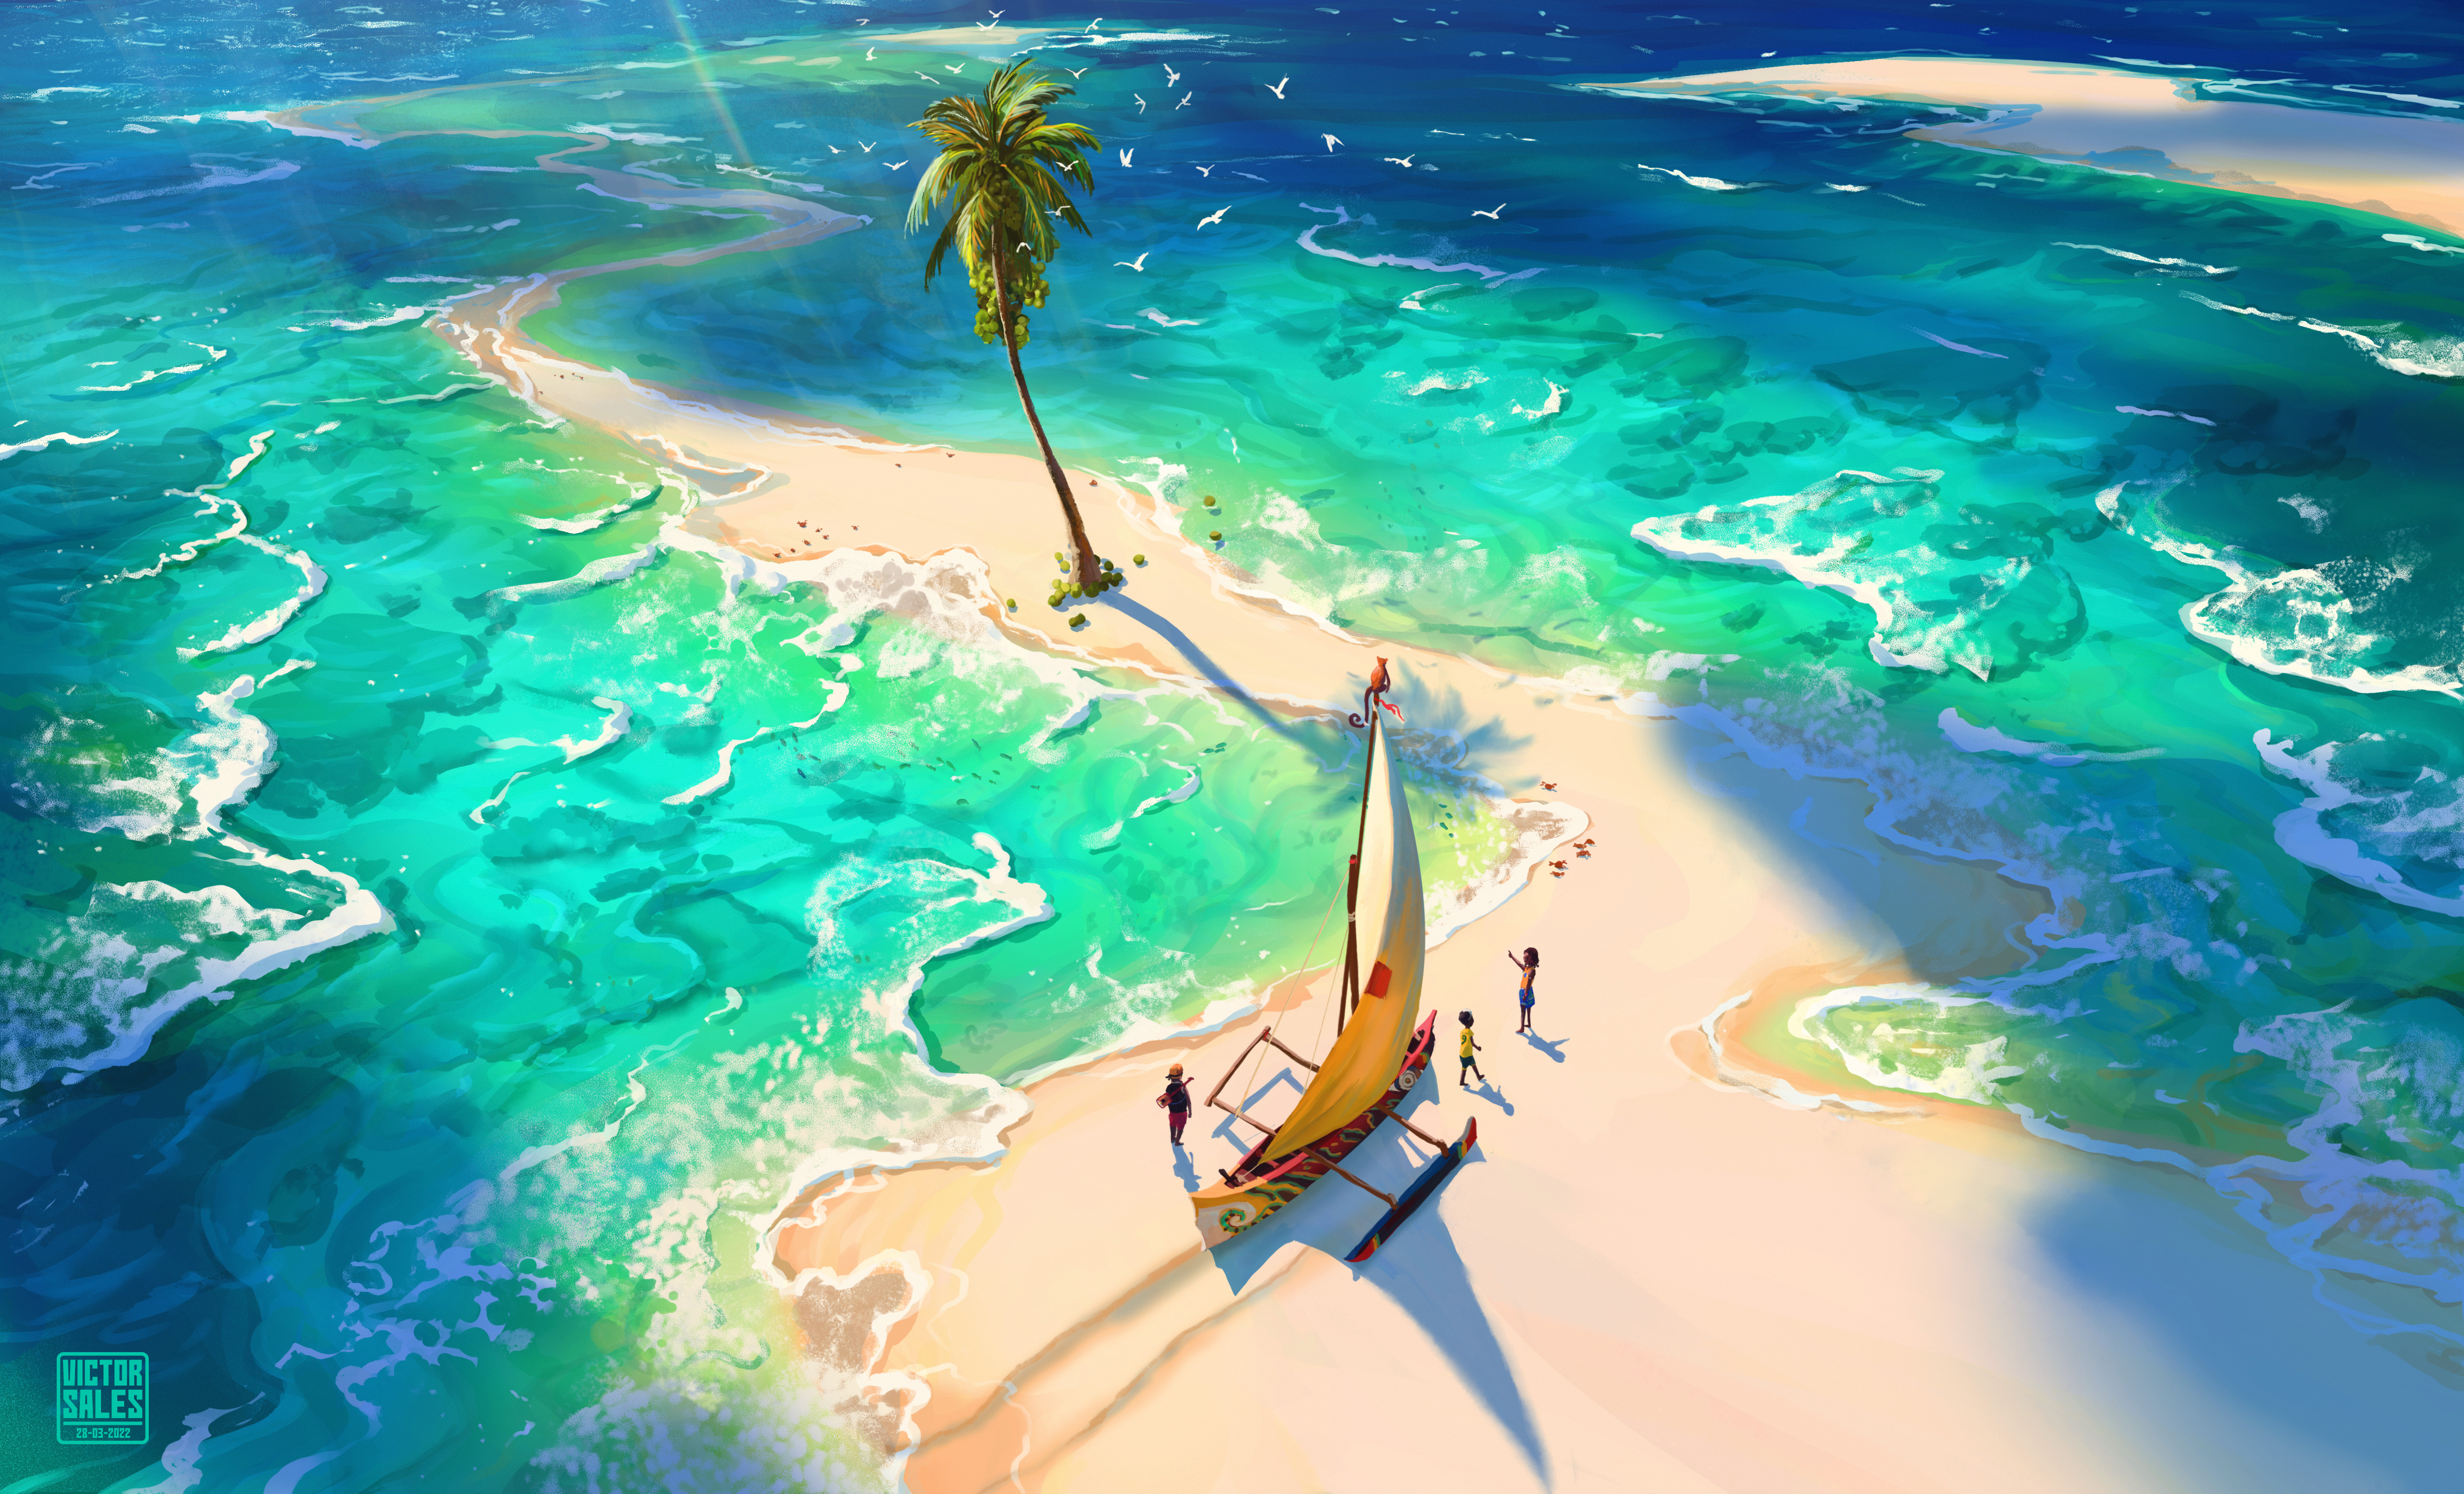 VSales Digital Art Artwork Illustration Landscape Sea Water Children Palm Trees Beach Sand Sailing S 5000x3032